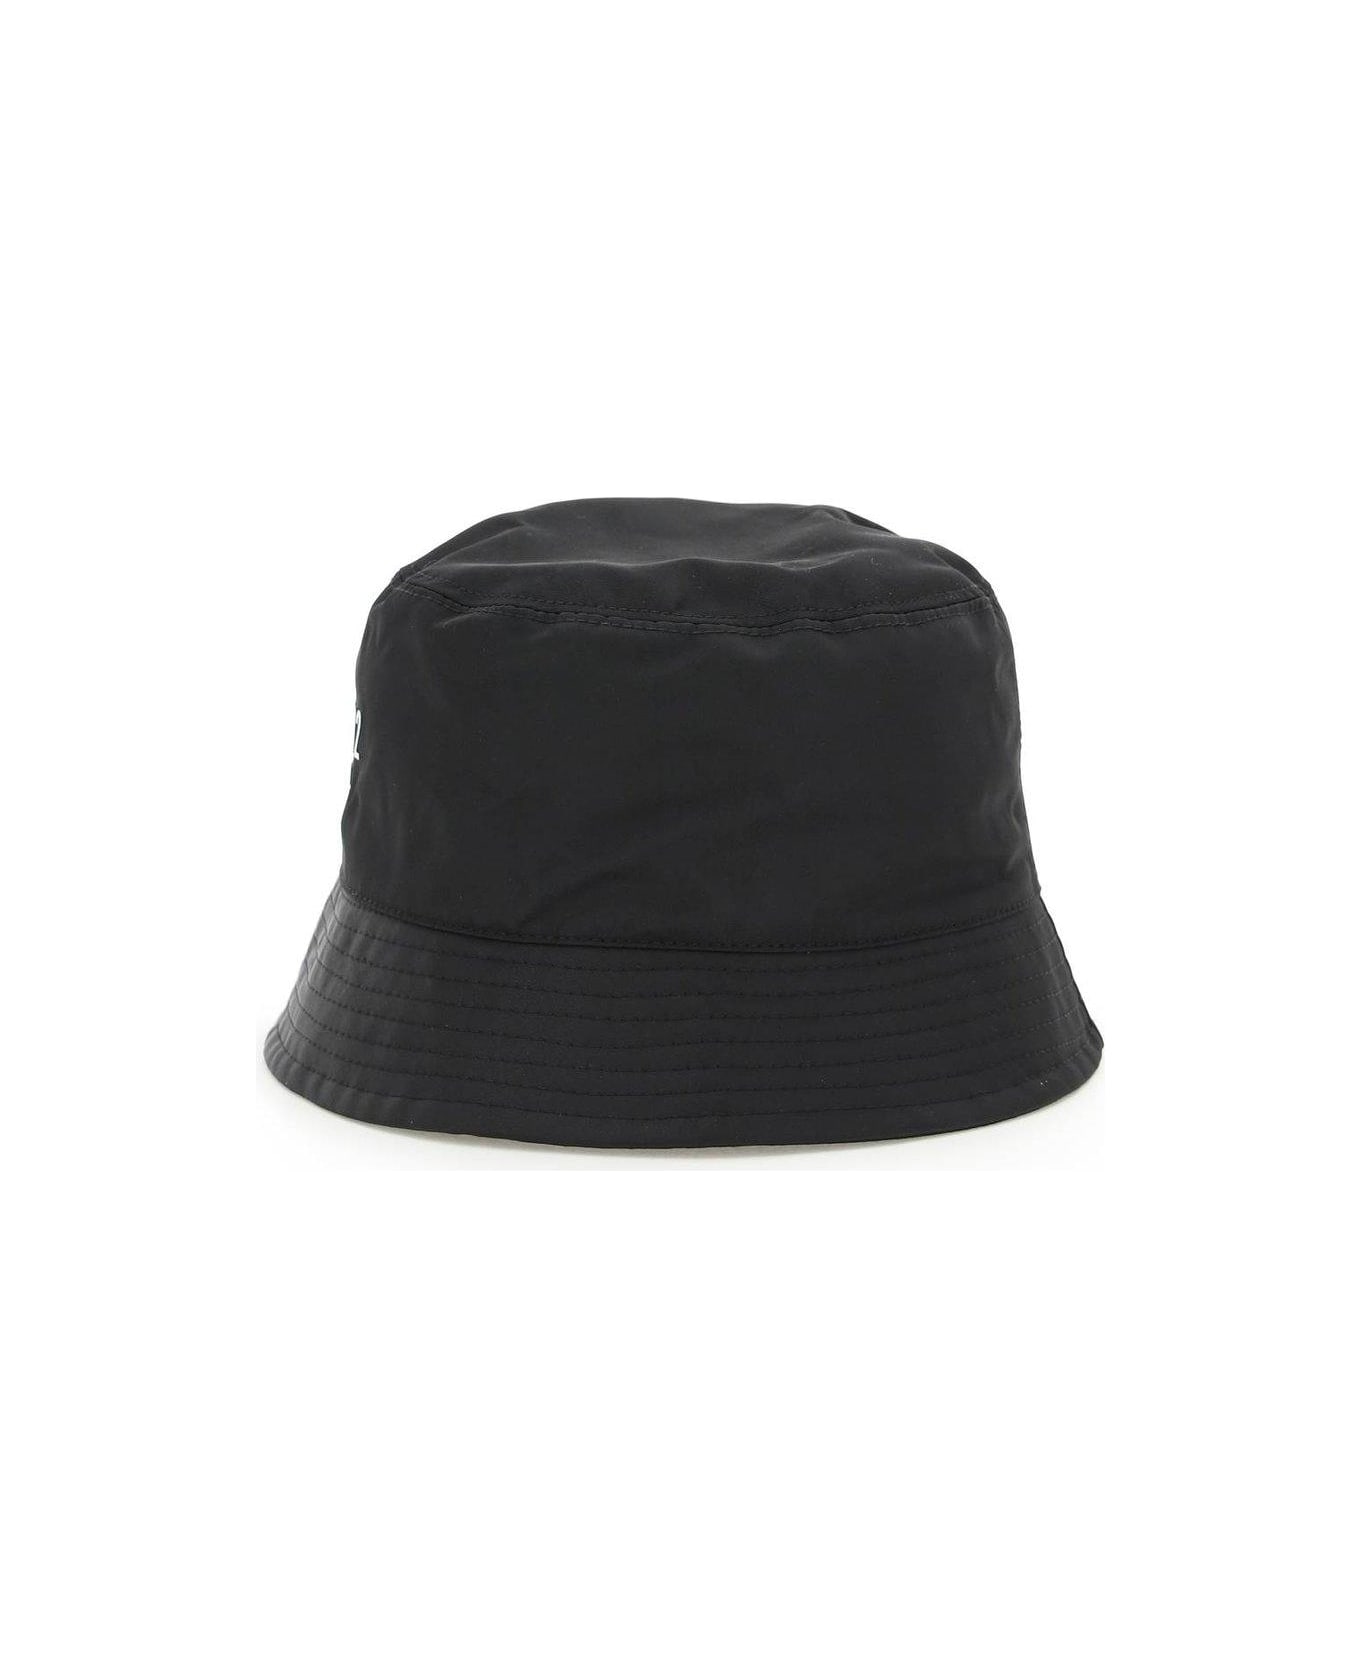 Dsquared2 Ceresio 9 Logo-printed Bucket Hat - Nero 帽子